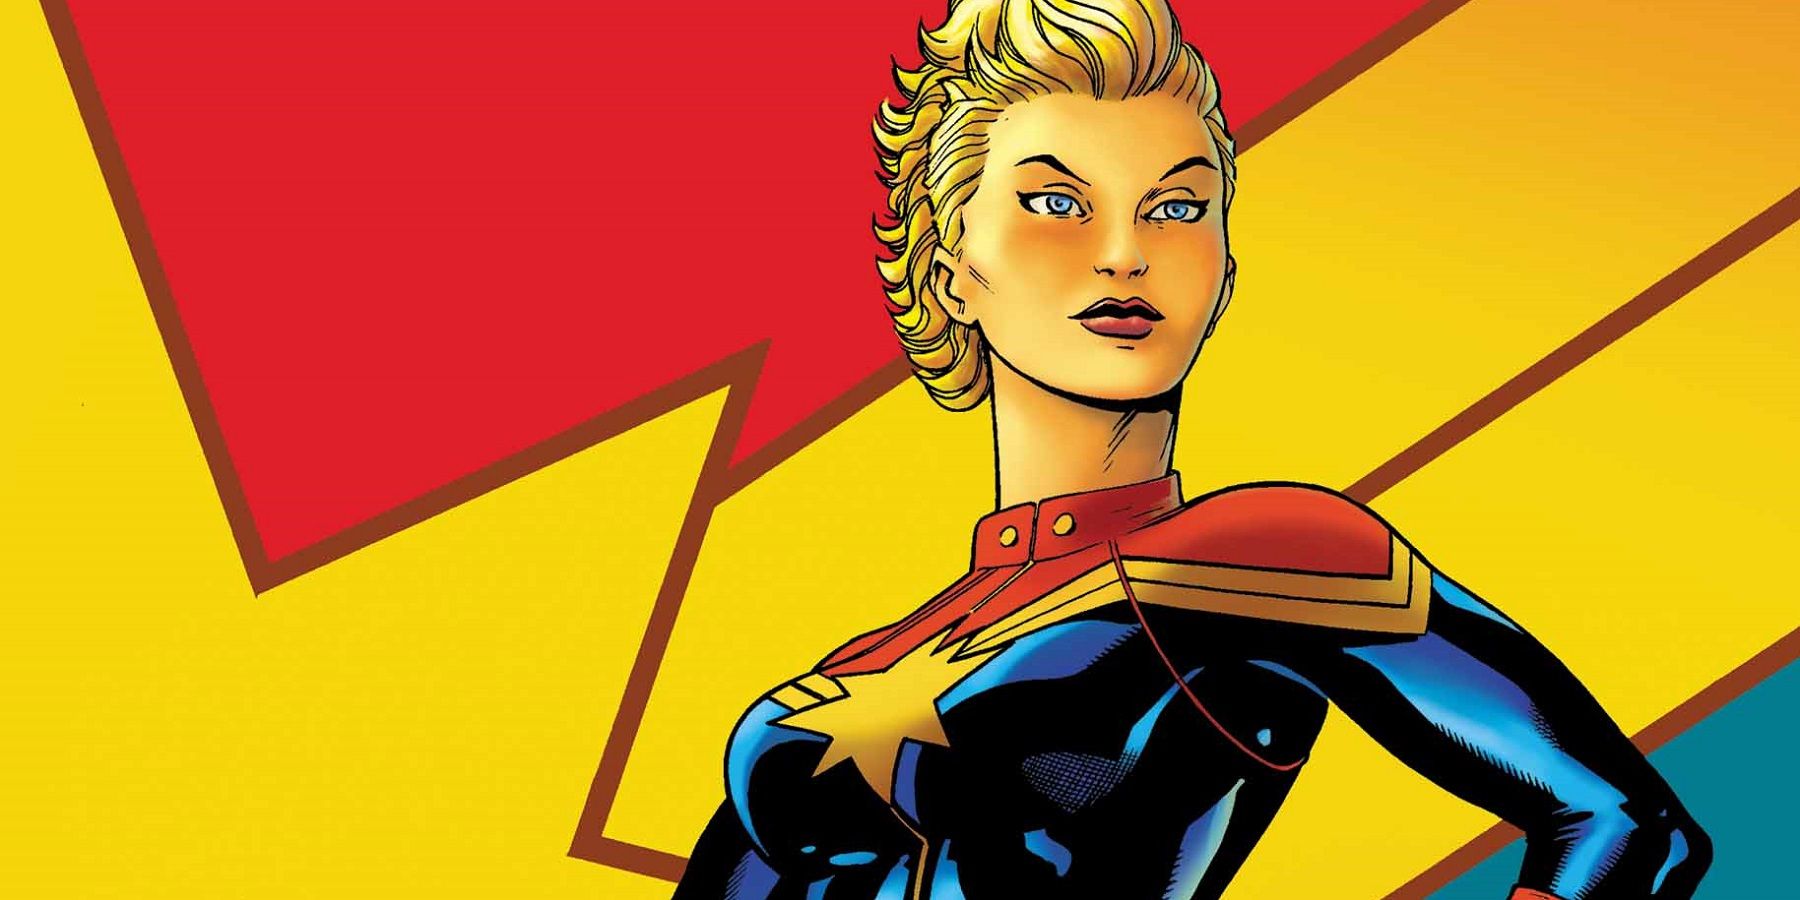 Carol Danvers in her new Captain Marvel costume